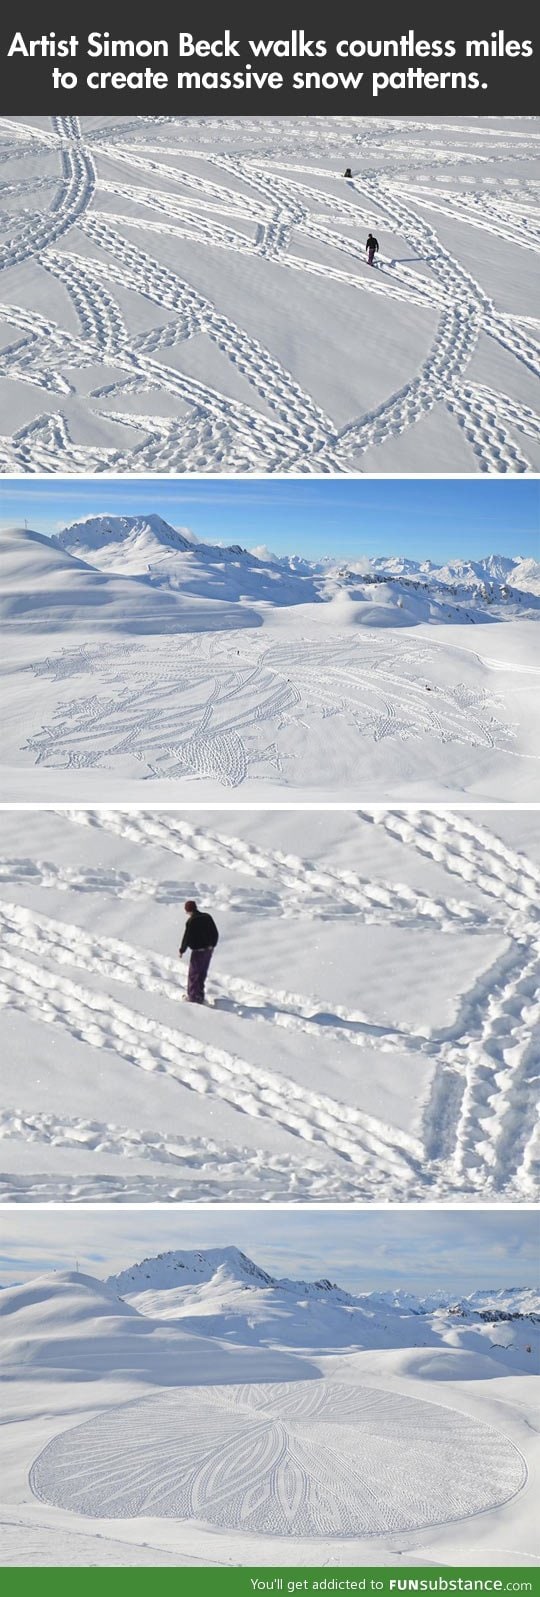 Creating massive snow patterns